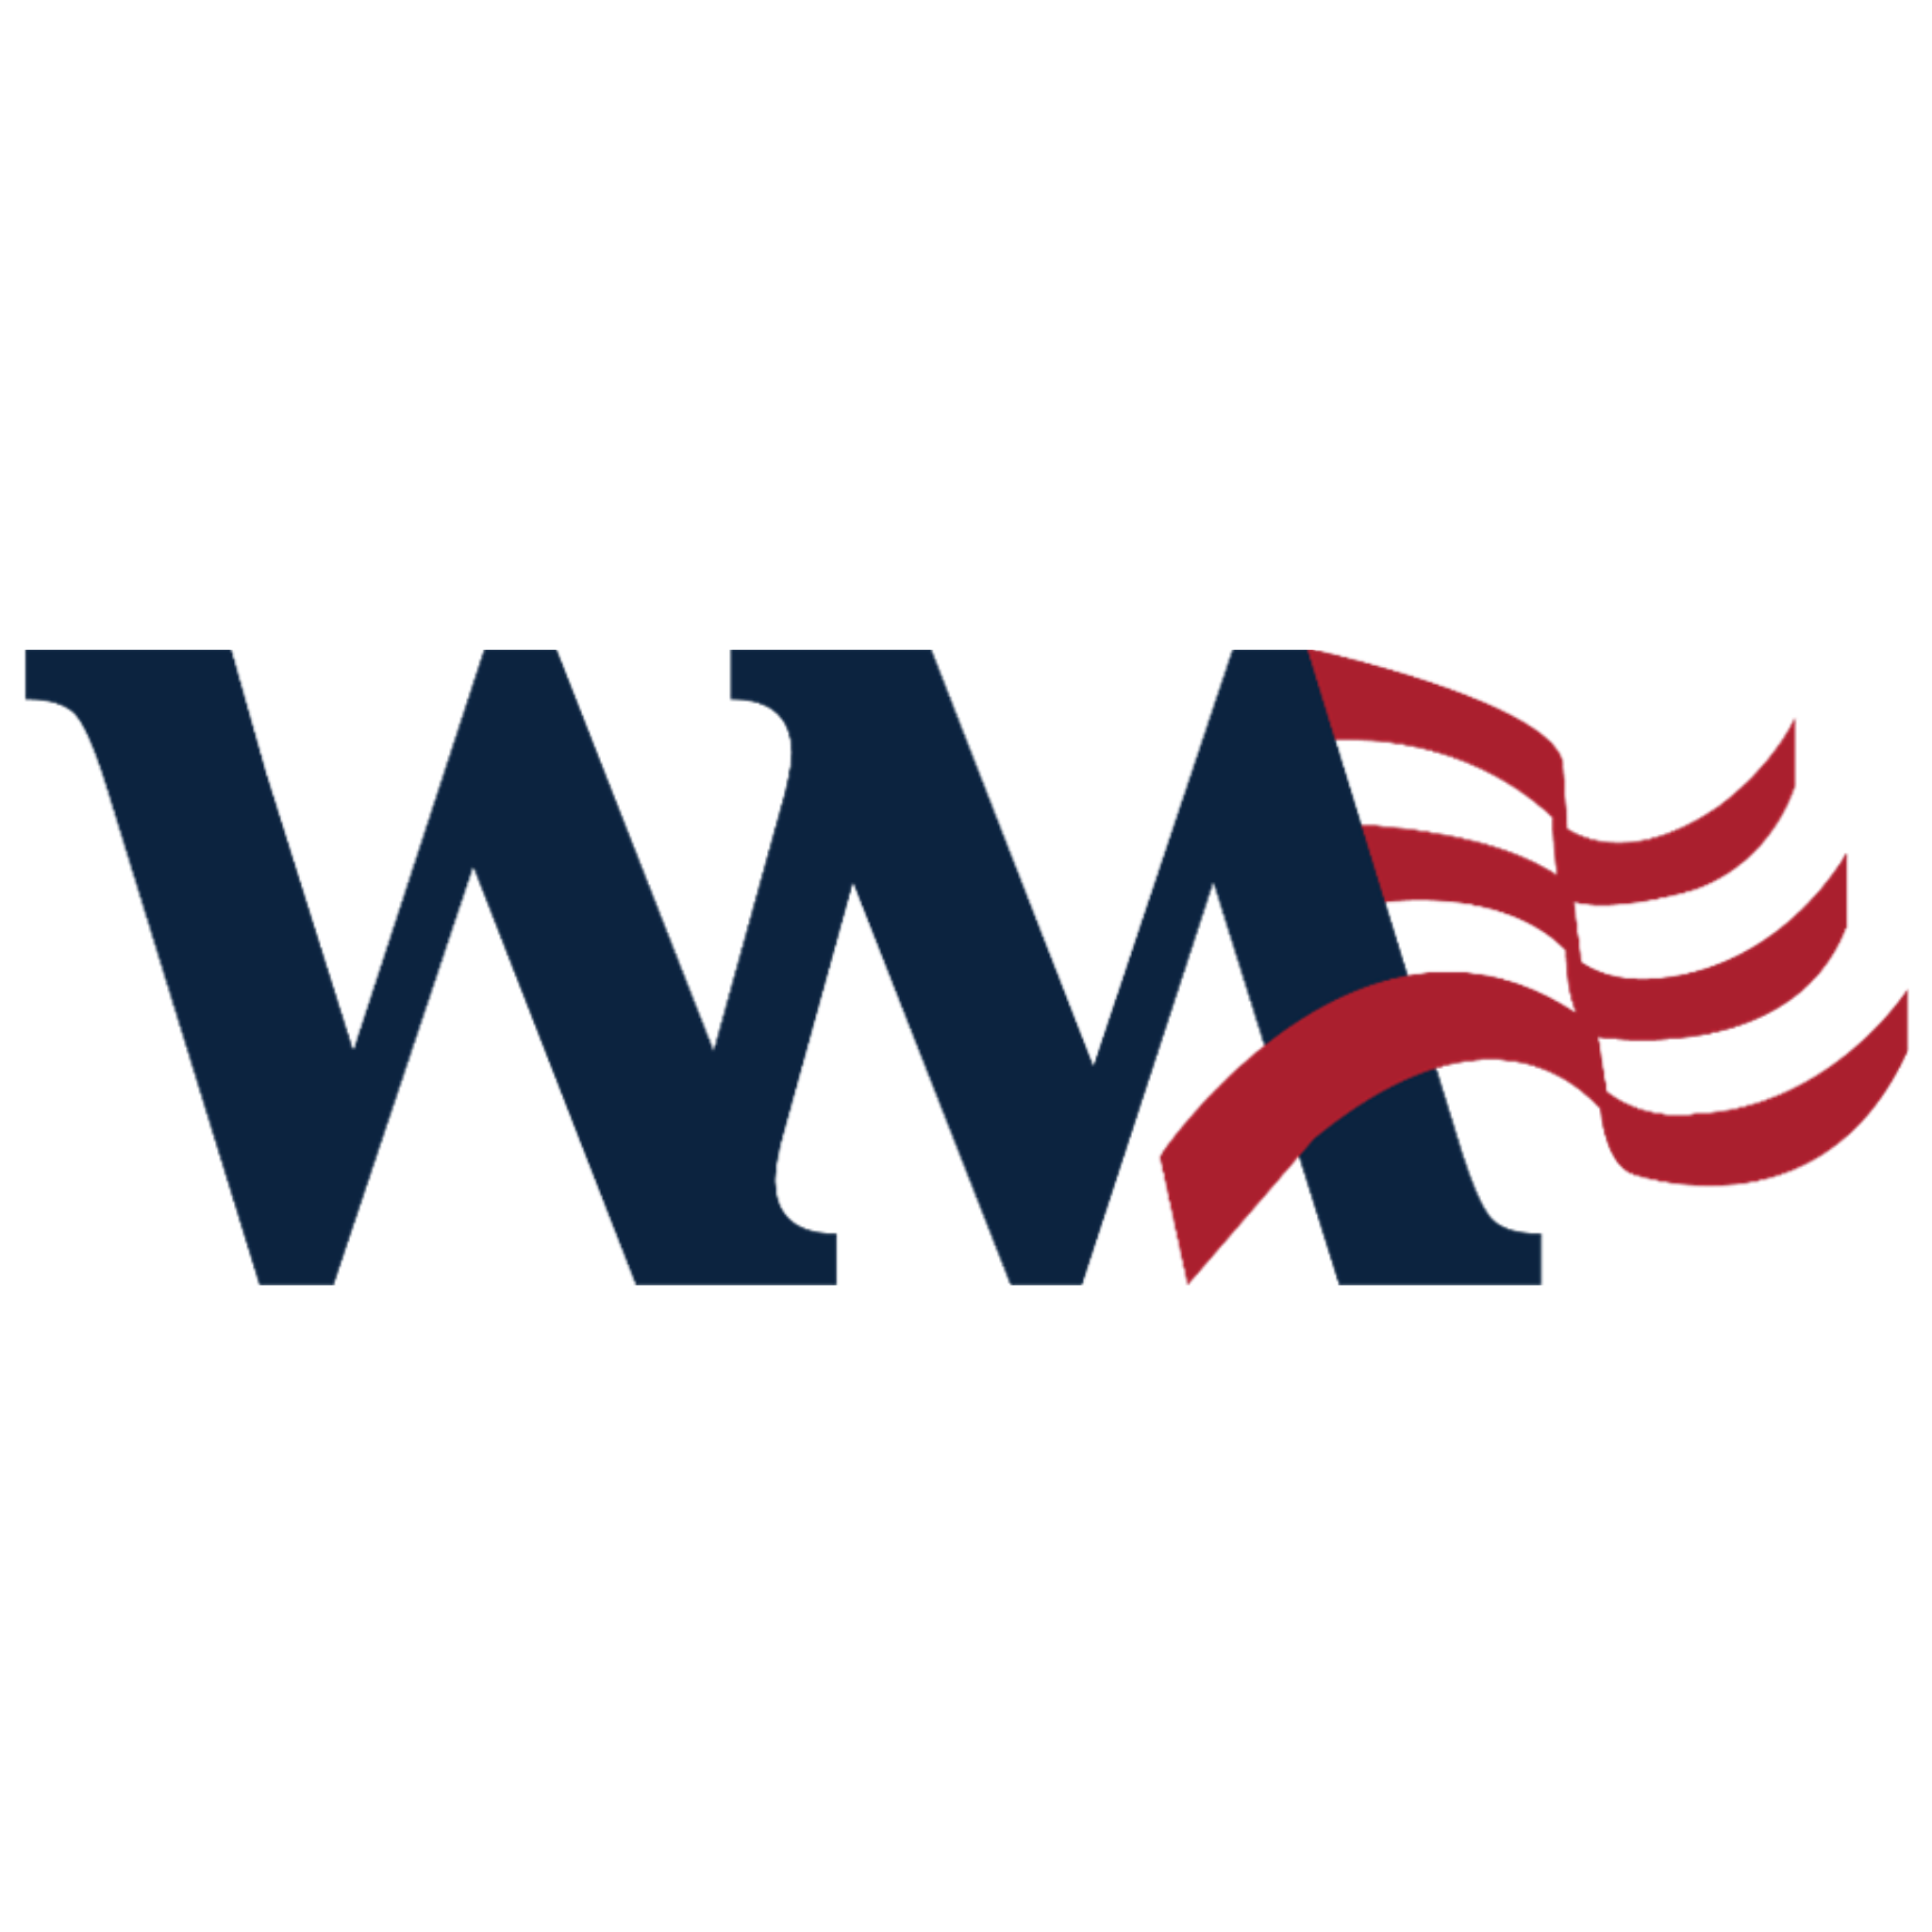 The War Memorial logo